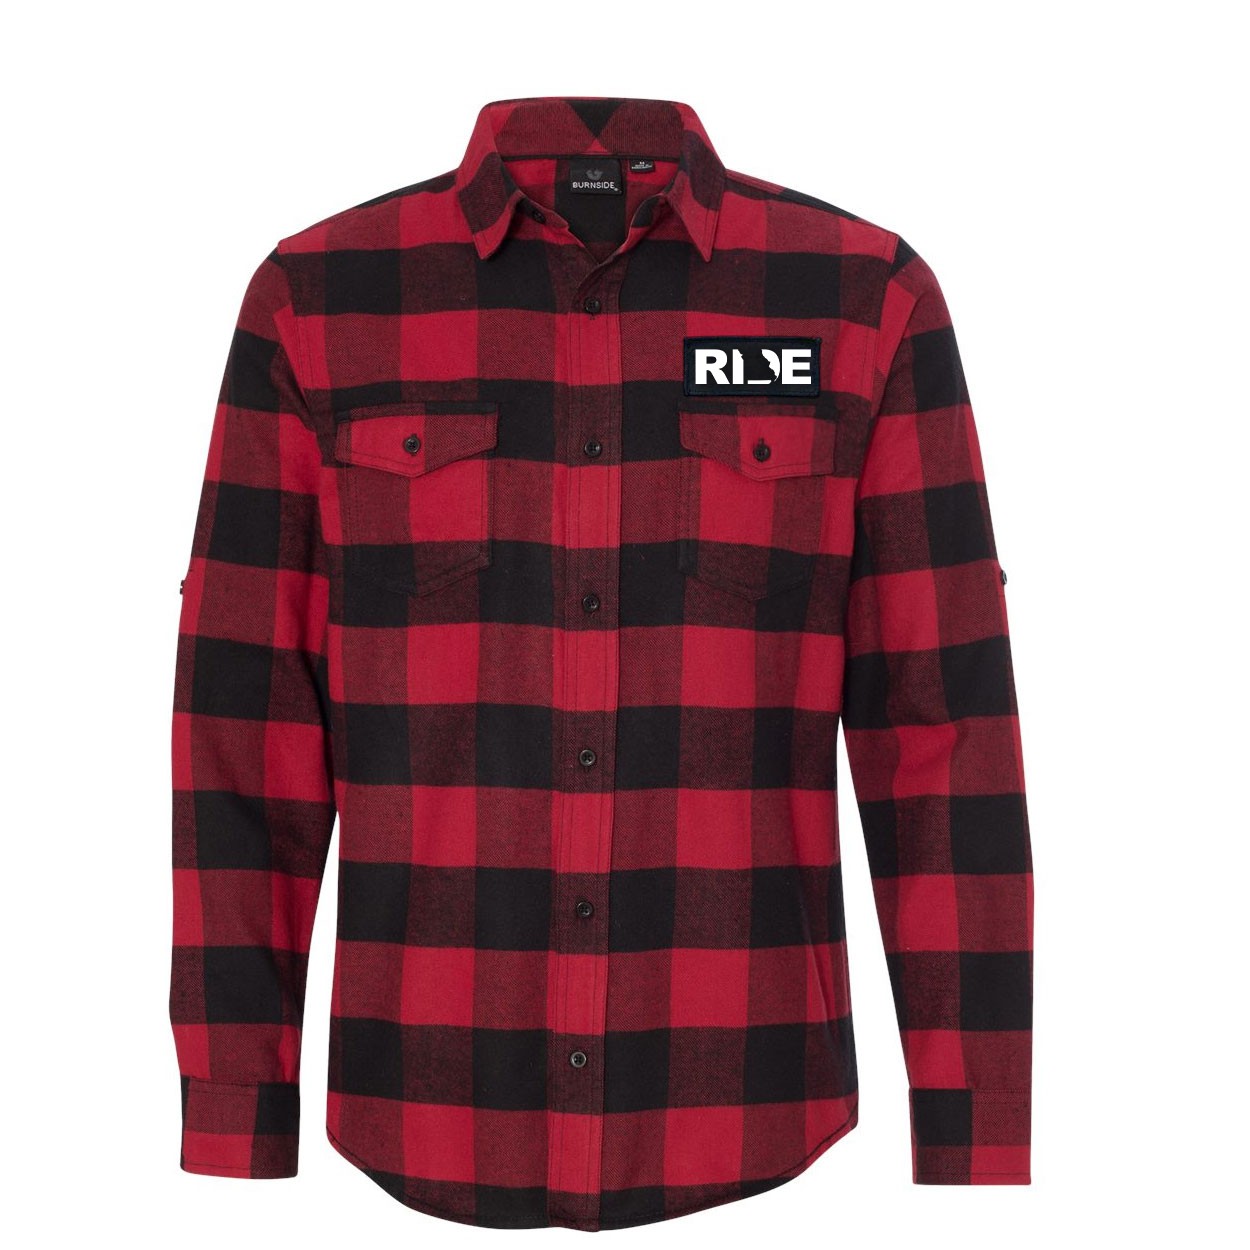 Ride Missouri Classic Unisex Long Sleeve Woven Patch Flannel Shirt Red/Black Buffalo (White Logo)